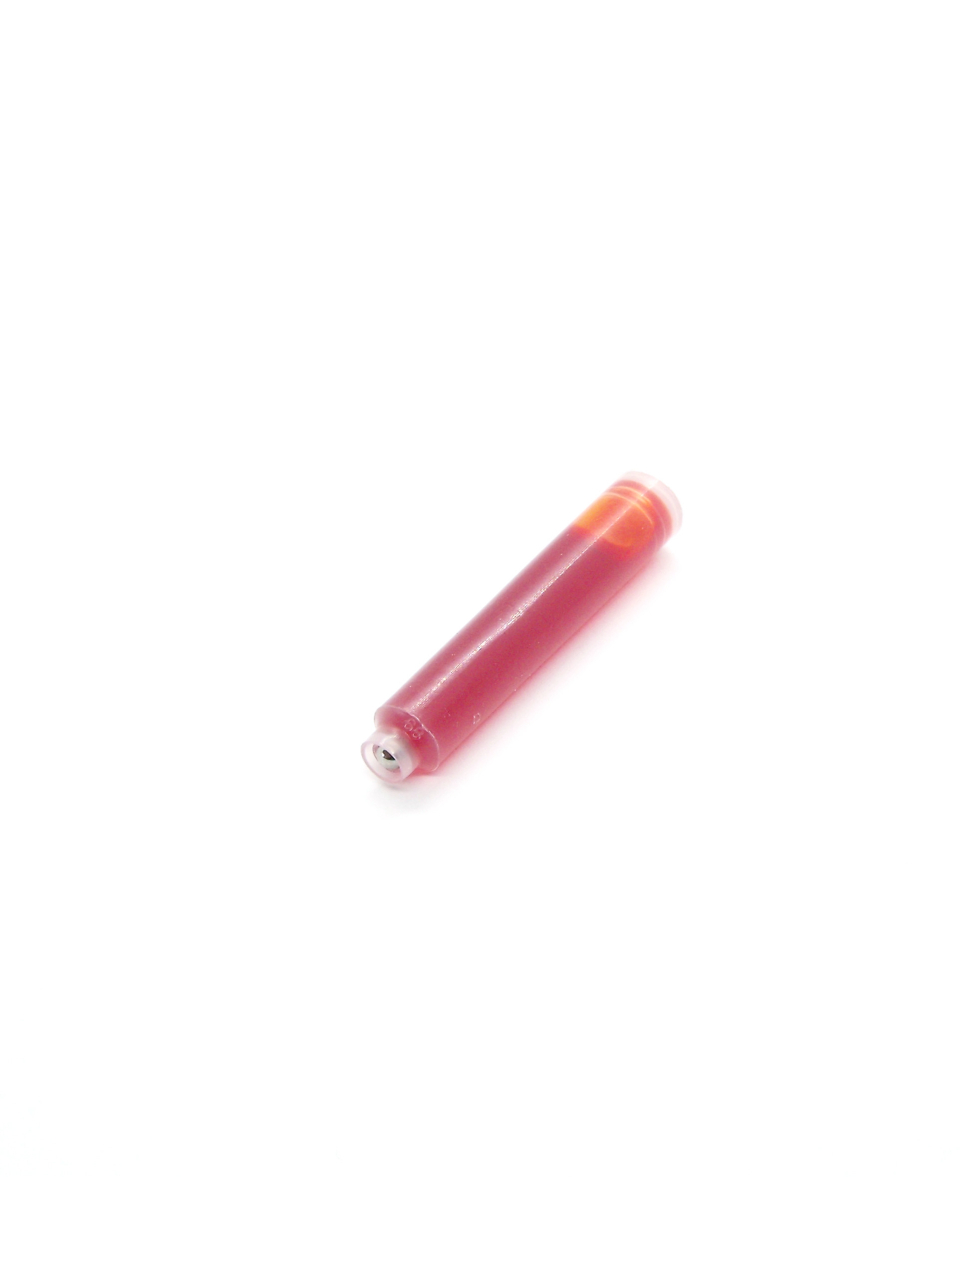 Cartridges For Tiffany & Co Fountain Pens (Orange)